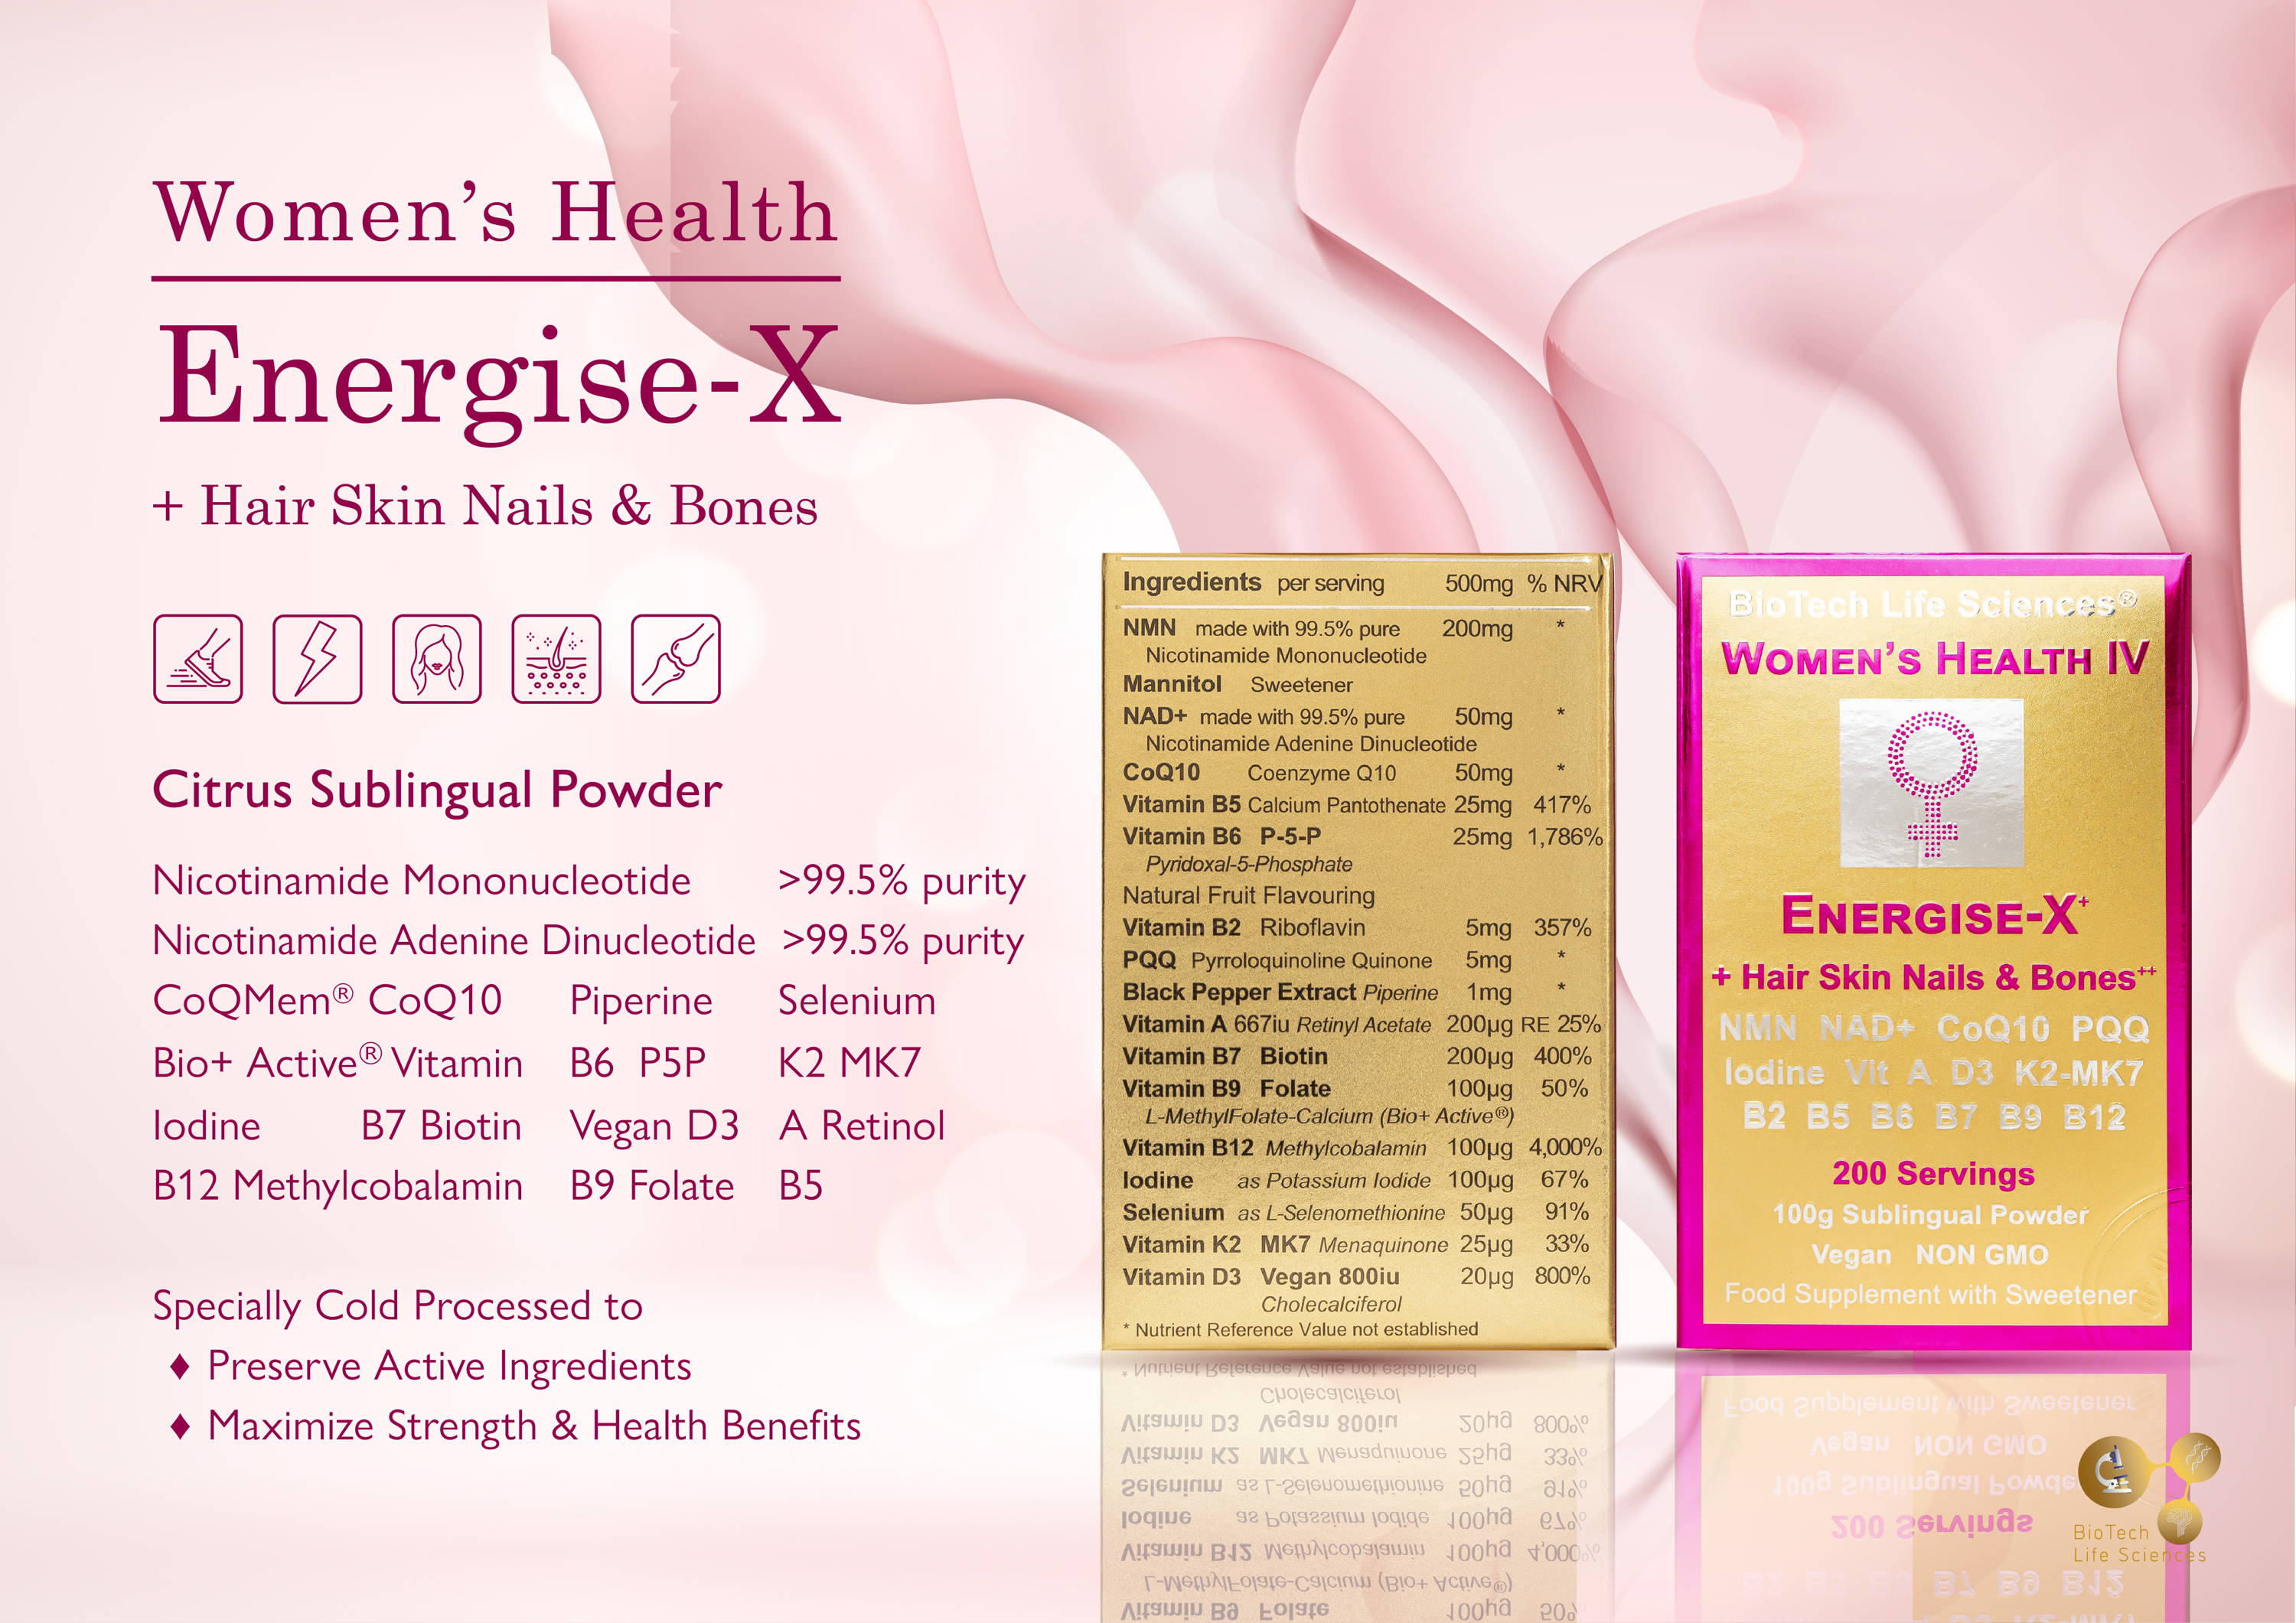 Women's Health Energise-X Ingredients